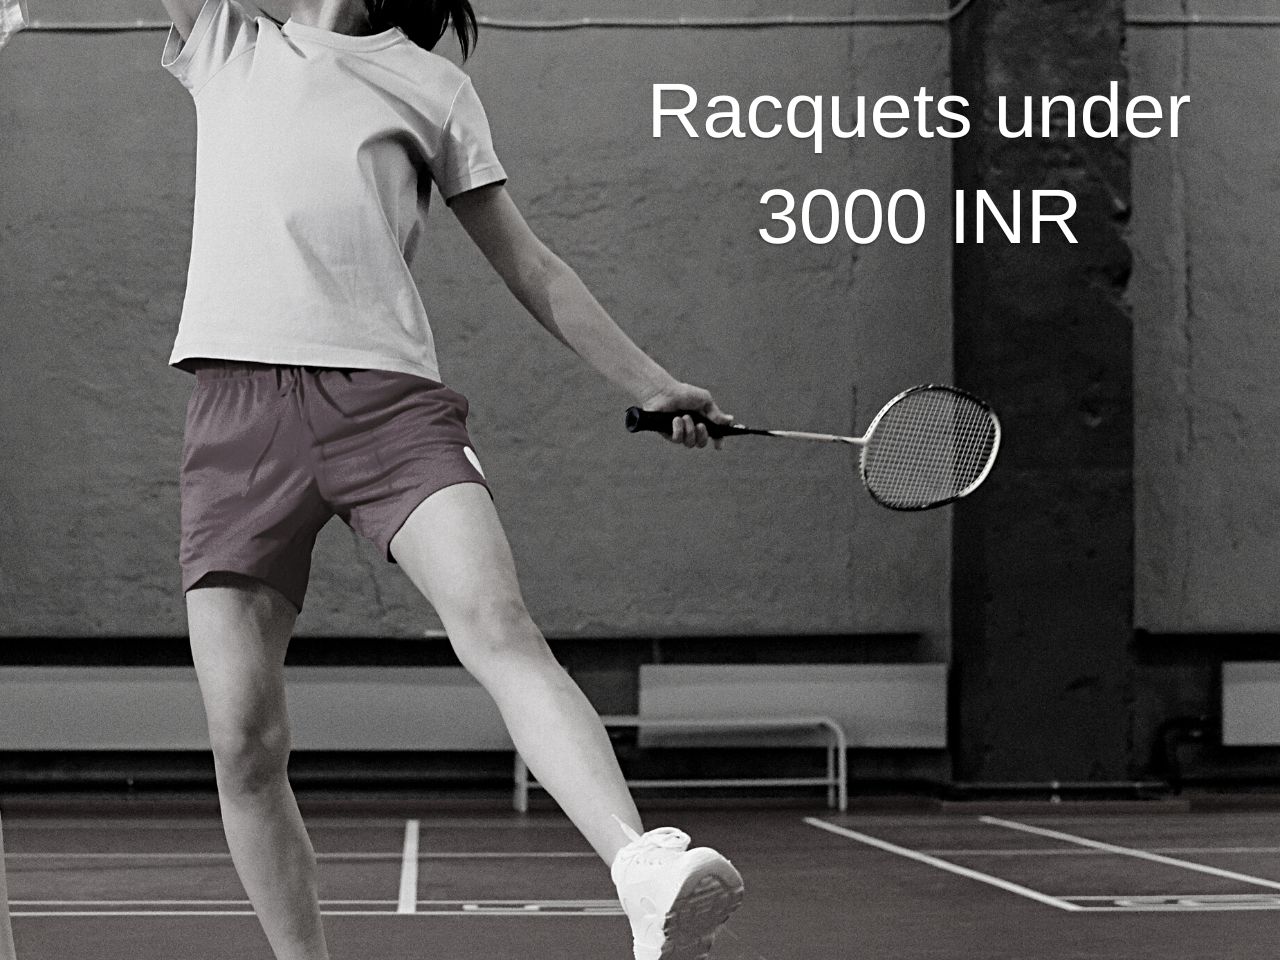 badminton rackets under 3000